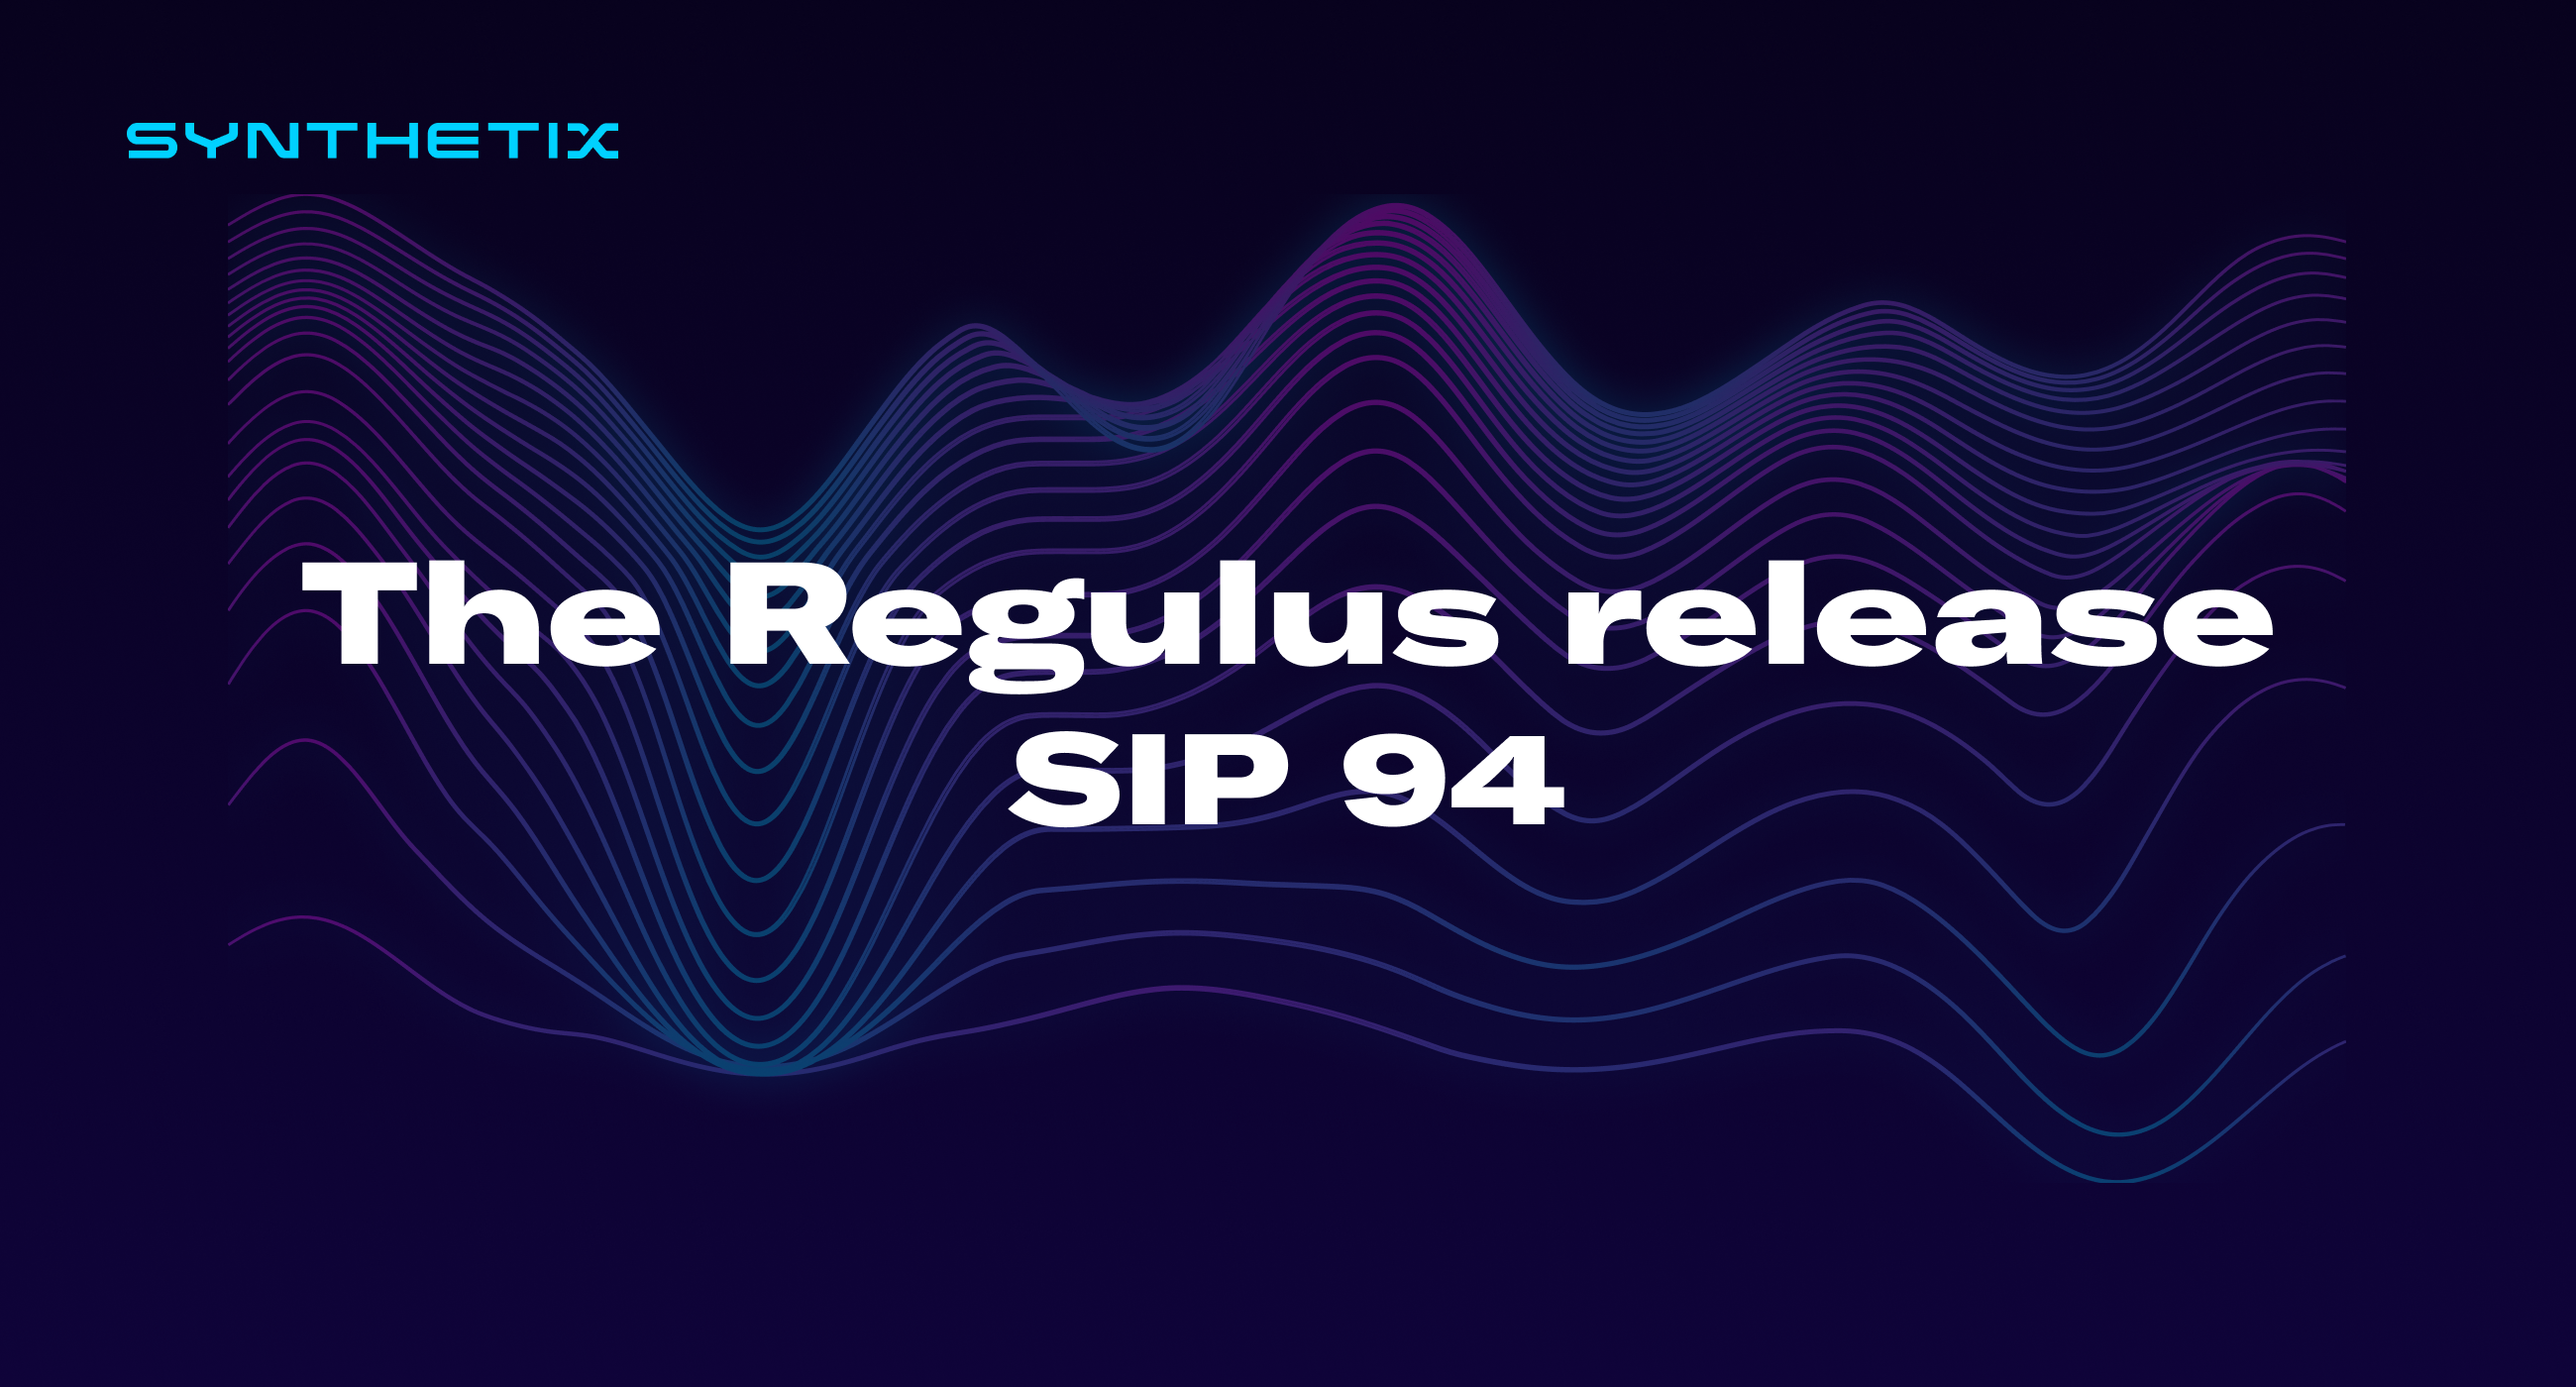 The Regulus release